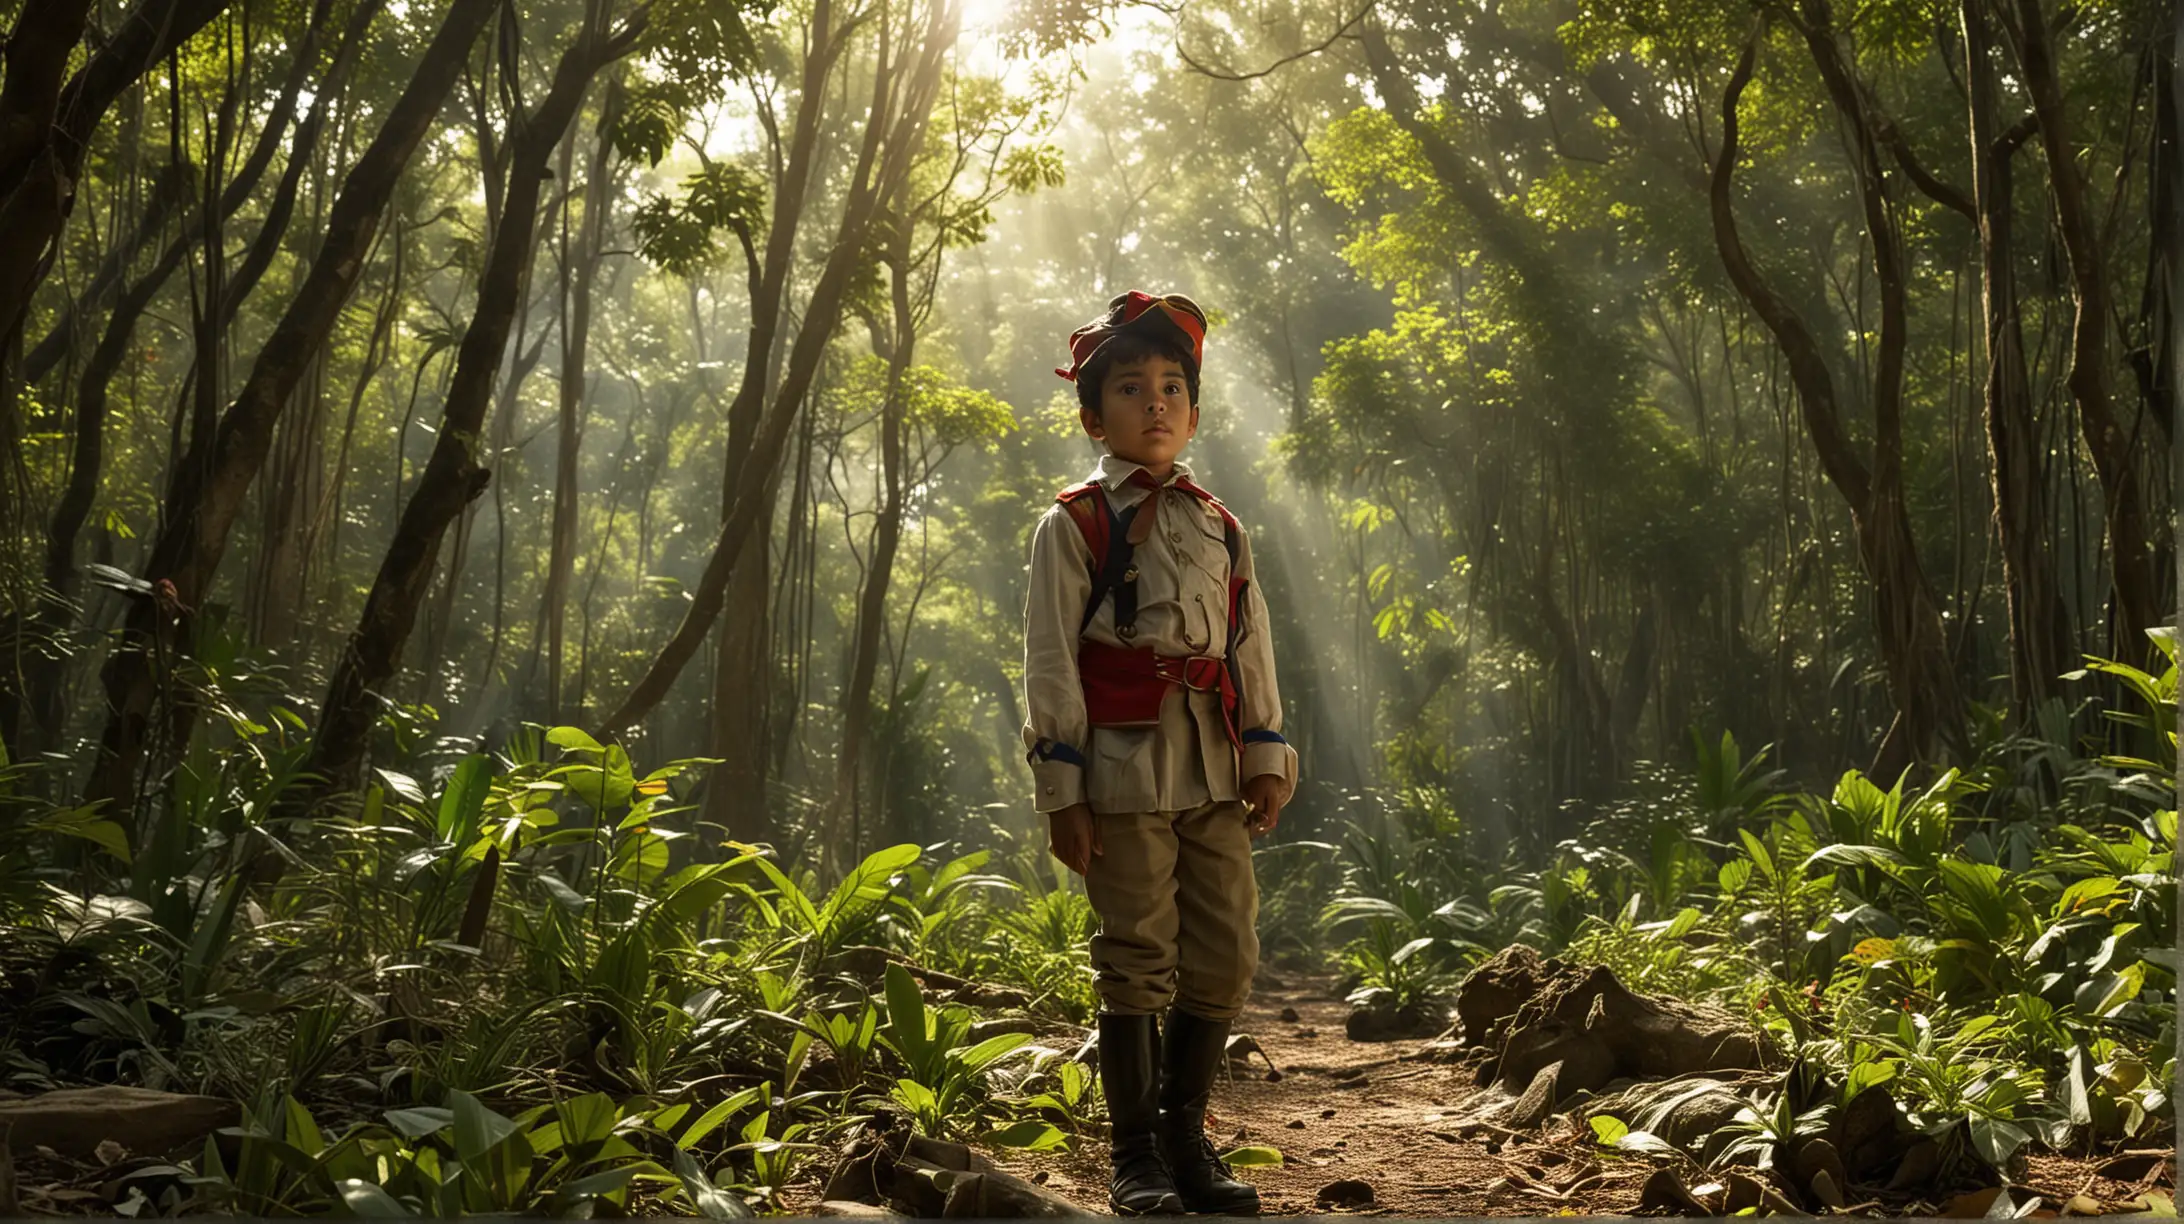 Young Simn Bolvar Explores Nature Amidst Lush Venezuelan Forest